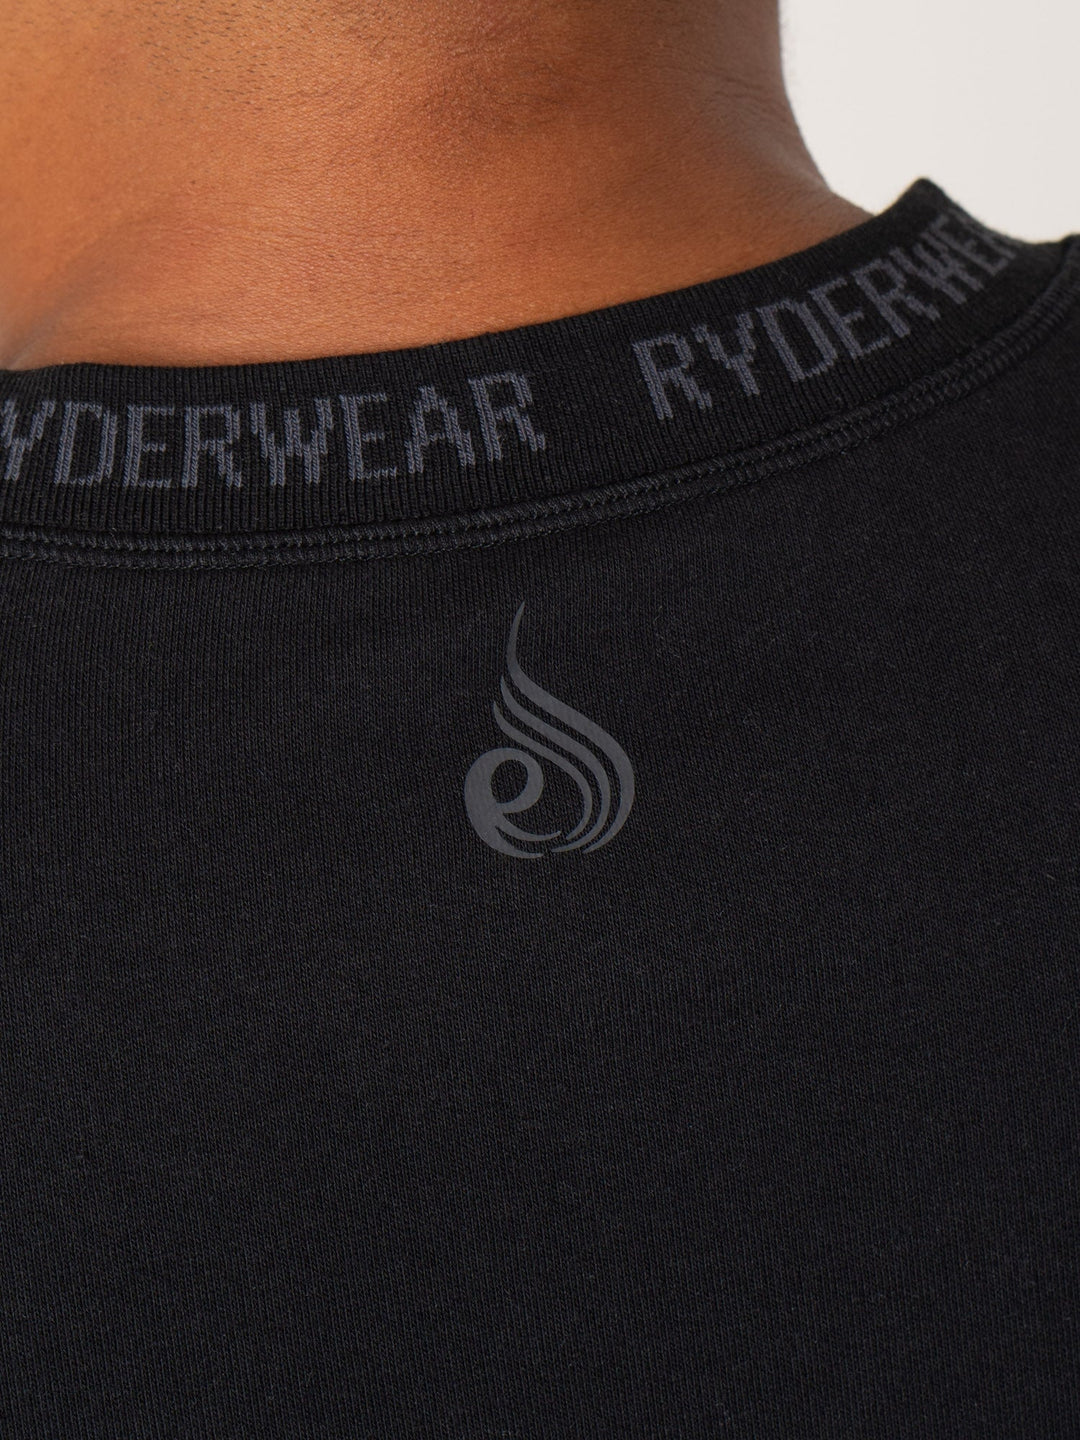 Pursuit Fleece T-Shirt - Black Clothing Ryderwear 